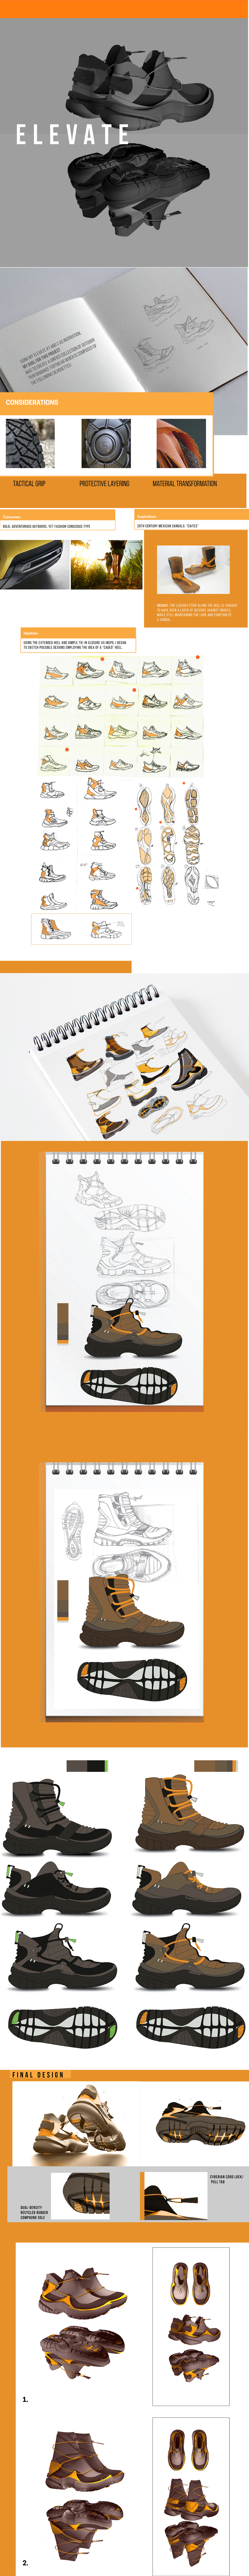 risd shoes footwear Performance design art sketching product